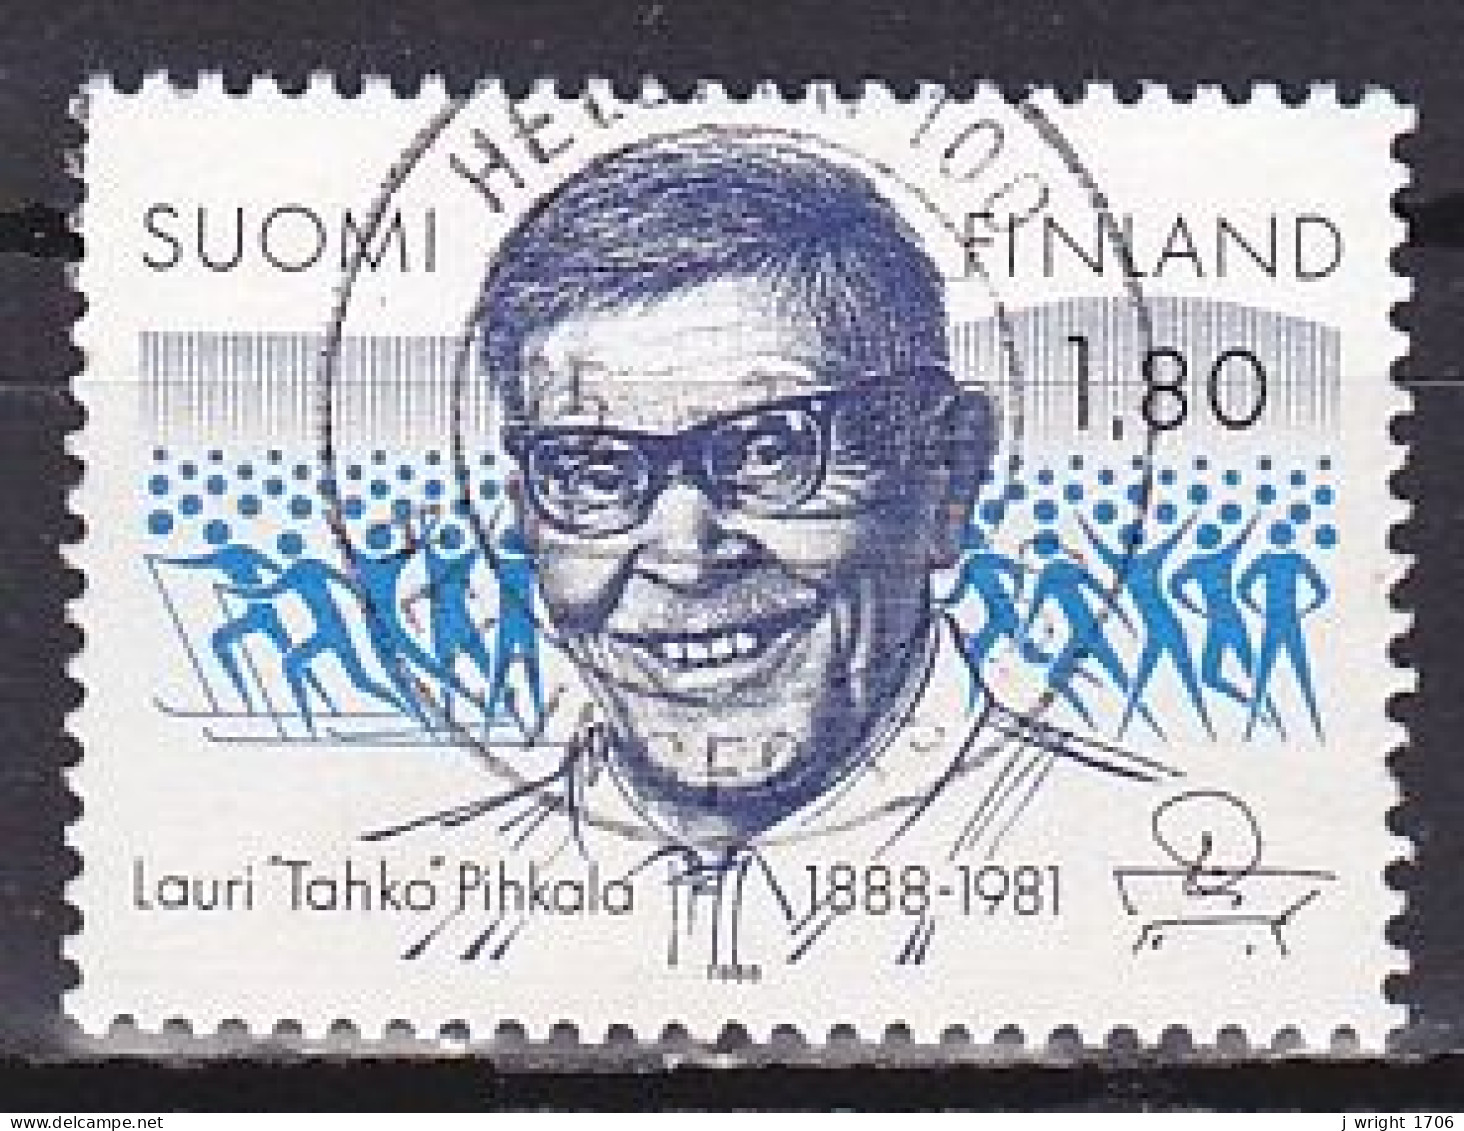 Finland, 1988, Lauri Pihkala, 1.80mk, USED - Usados